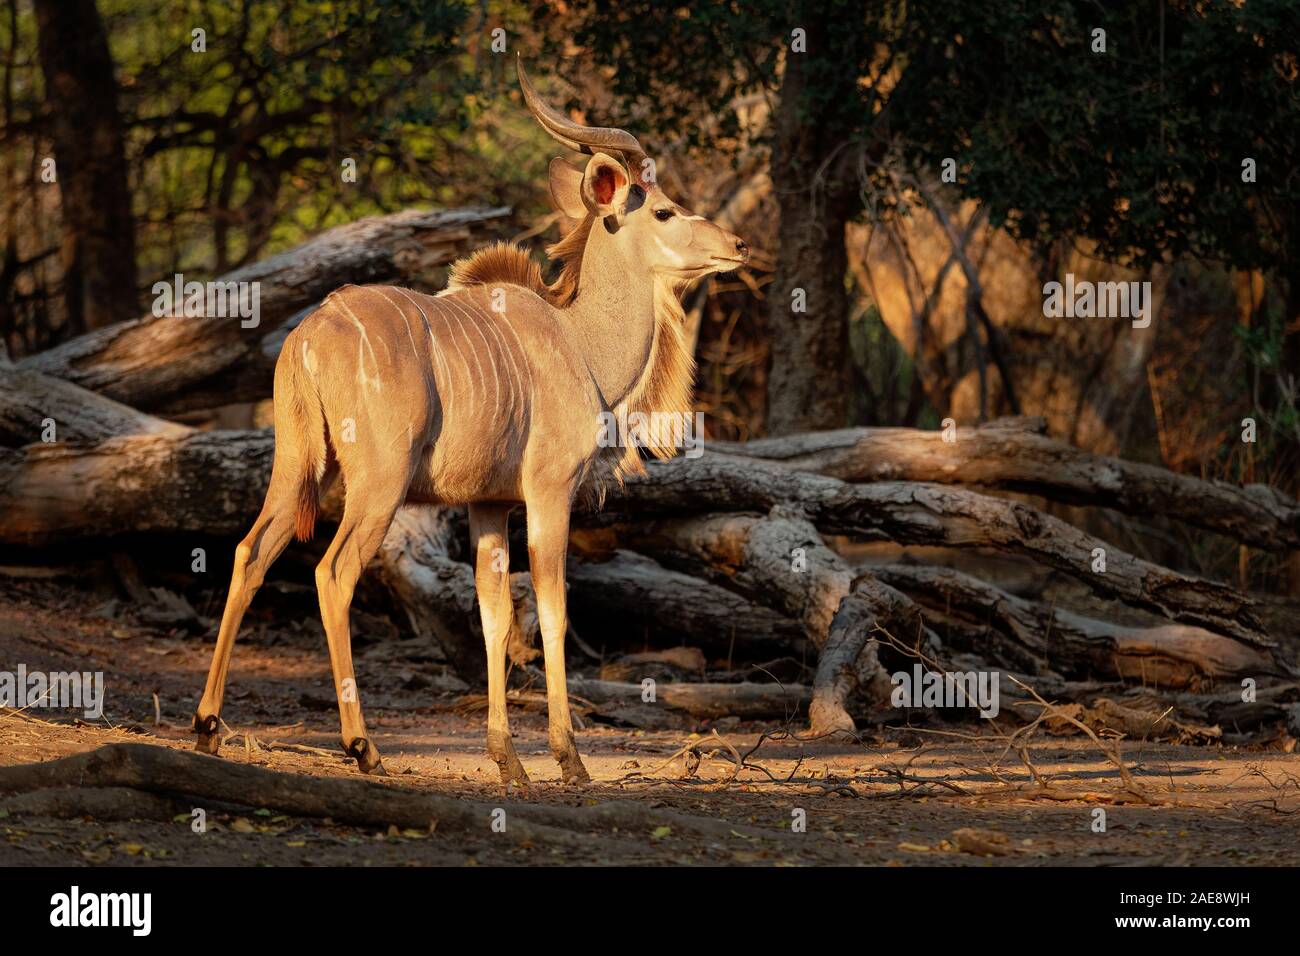 Greater Kudu - Tragelaphus strepsiceros woodland antelope found throughout eastern and southern Africa. Stock Photo